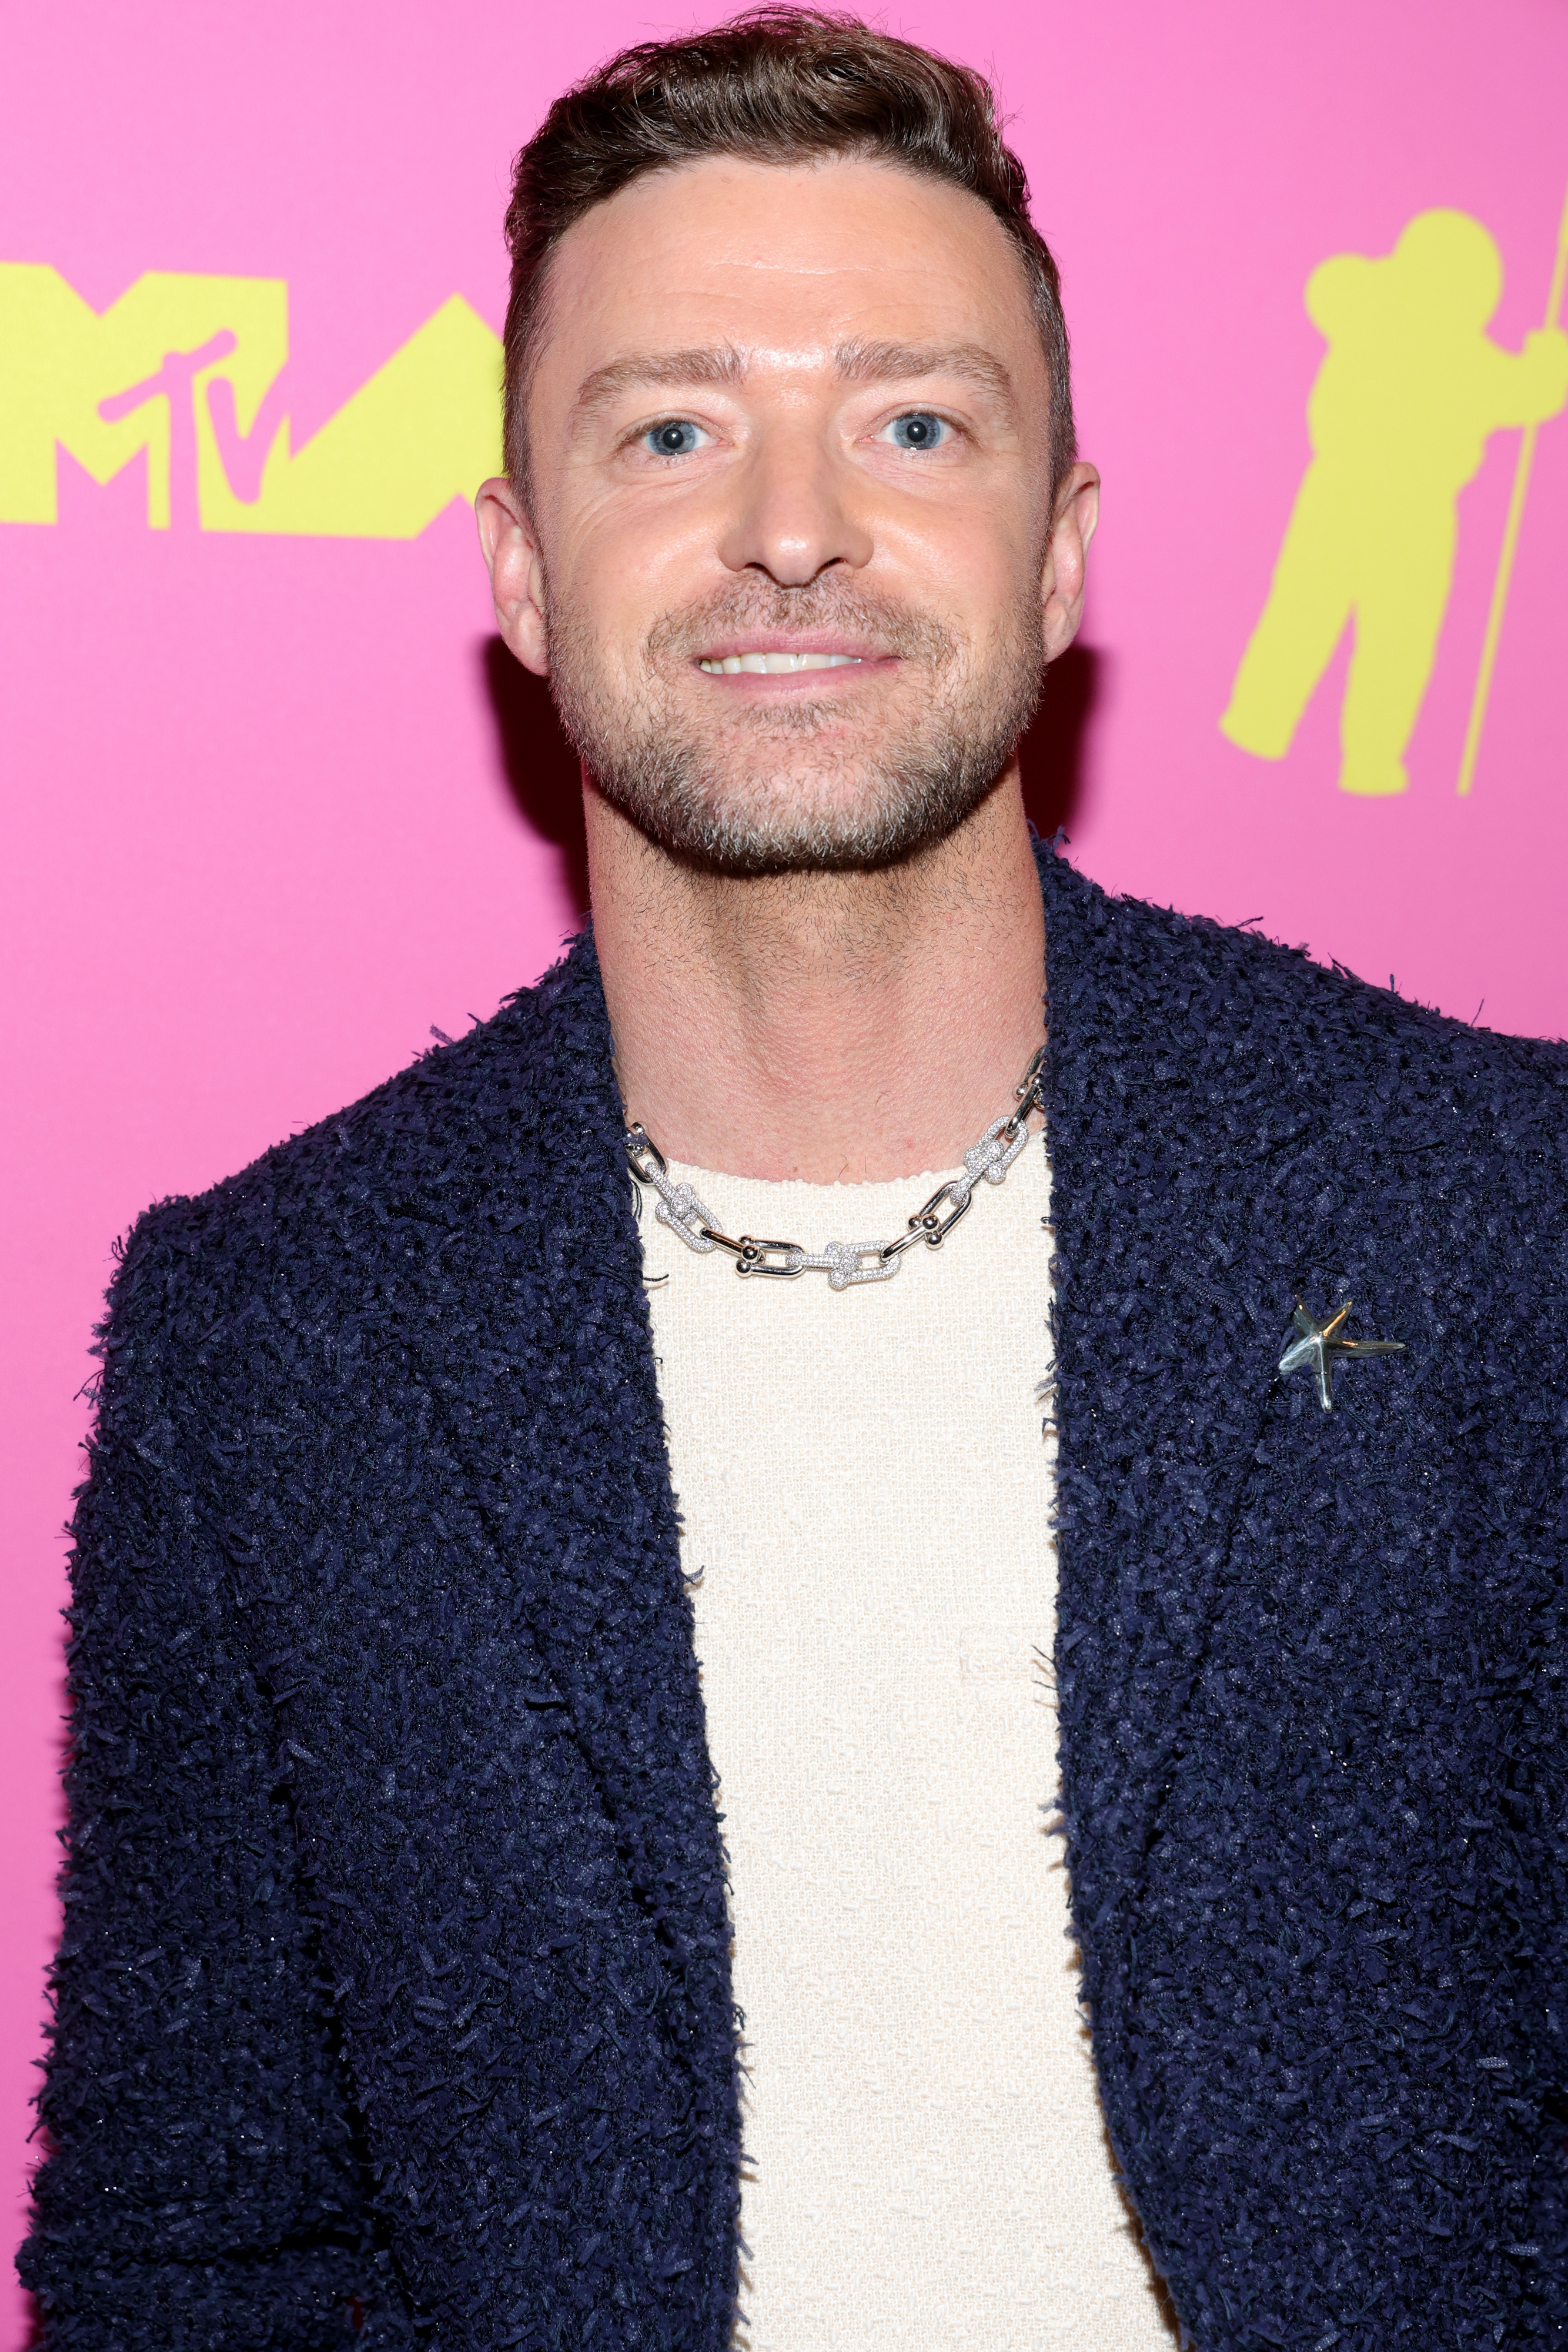 VMAs—Justin Timberlake, Megan Thee Stallion 'Appearing to Argue' Goes Viral